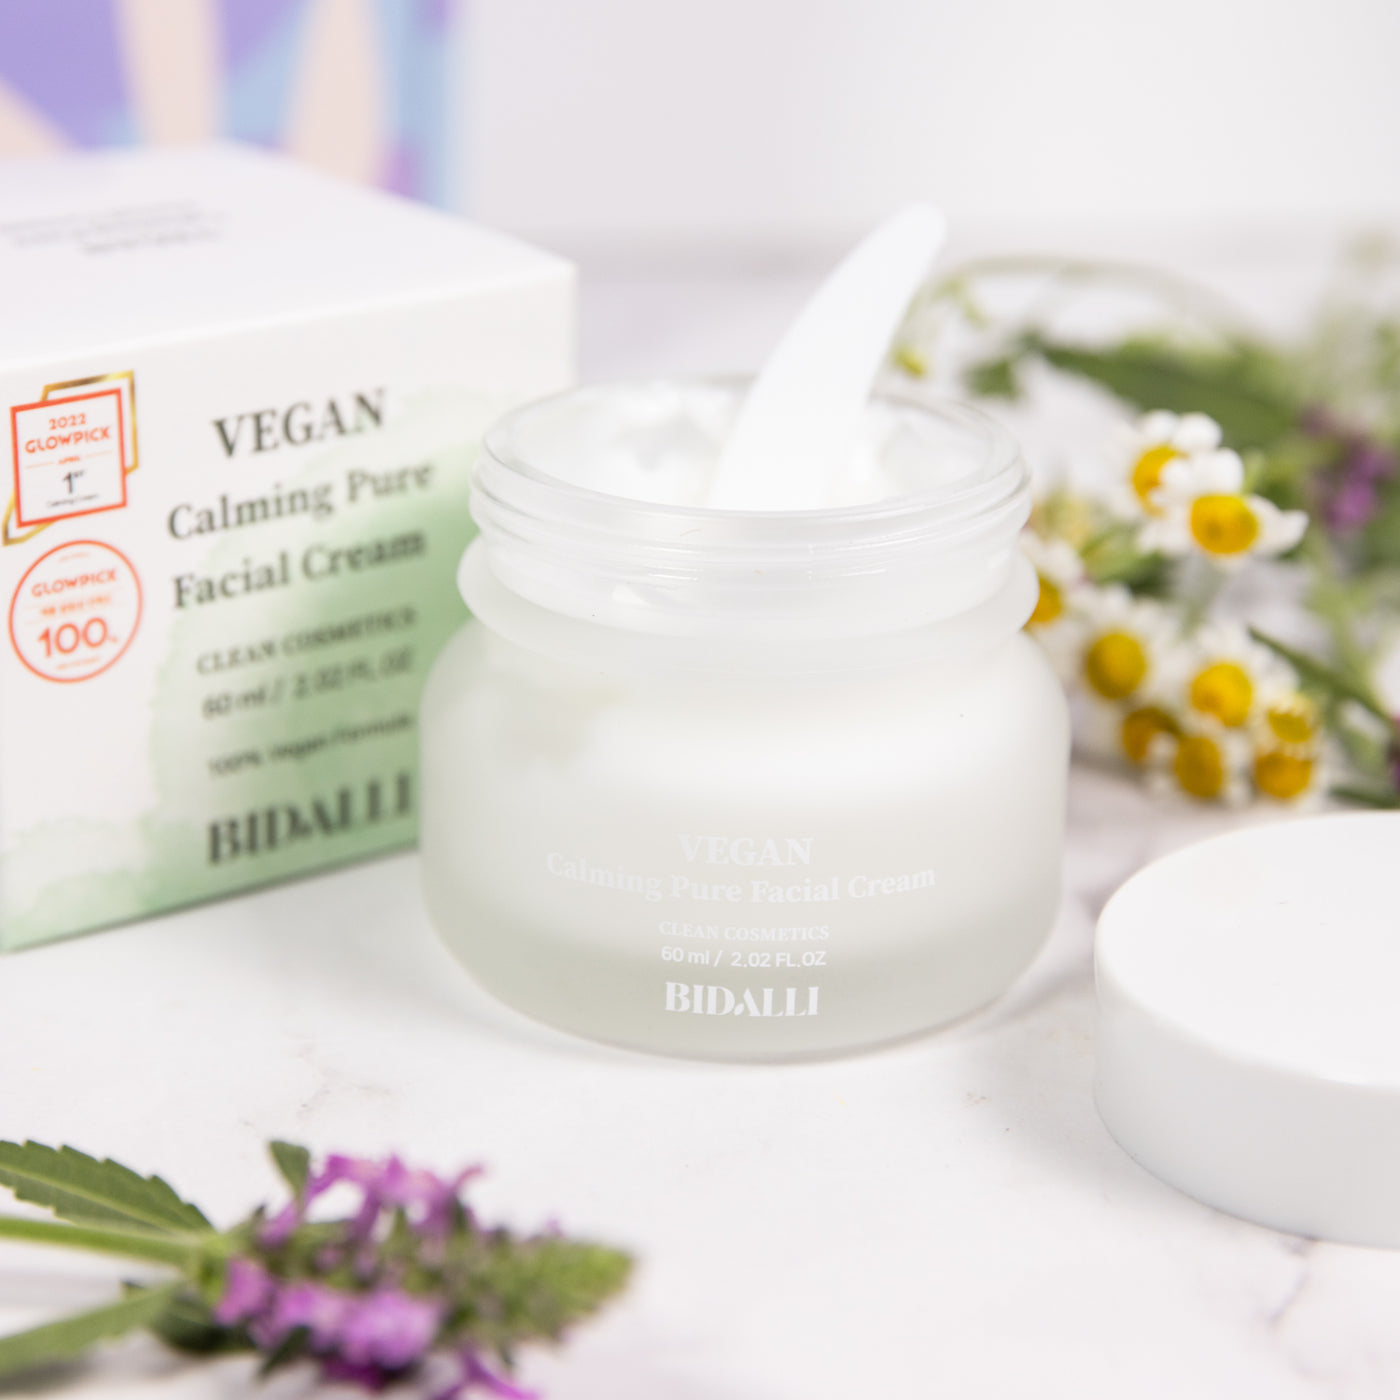 Bidalli | Vegan Calming Pure Facial Cream 60ML